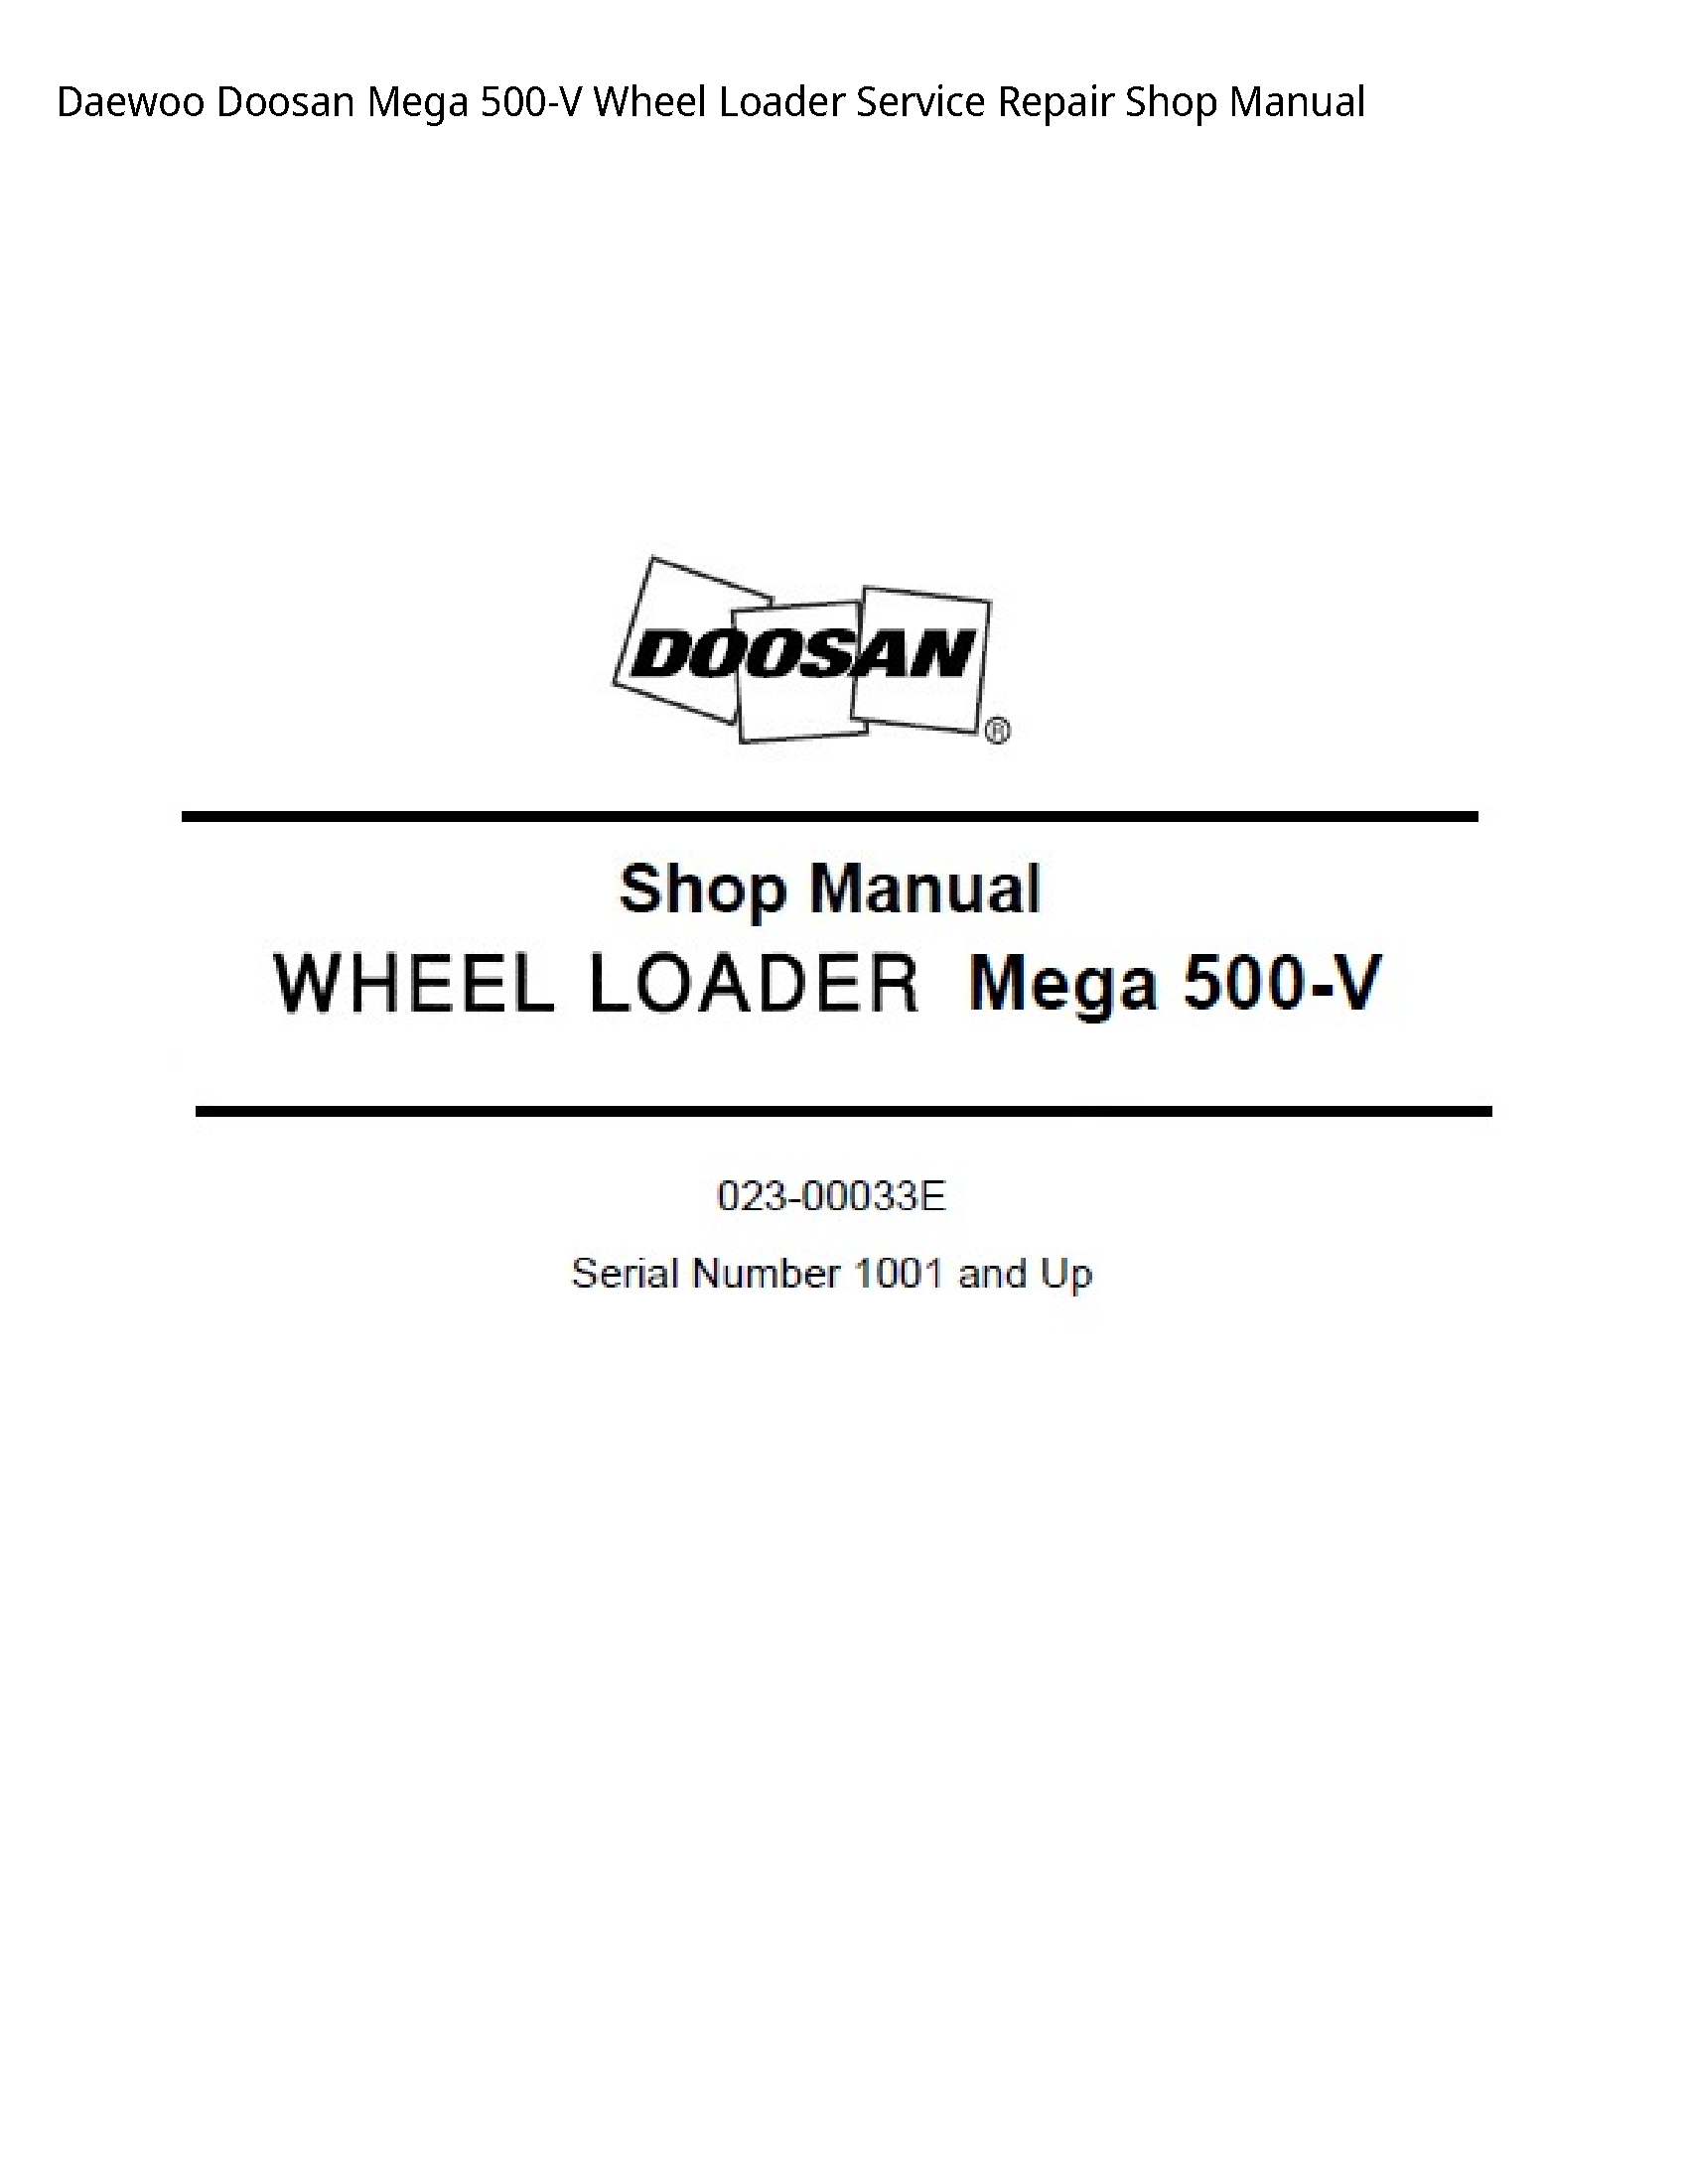 Daewoo Doosan 500-V Mega Wheel Loader manual